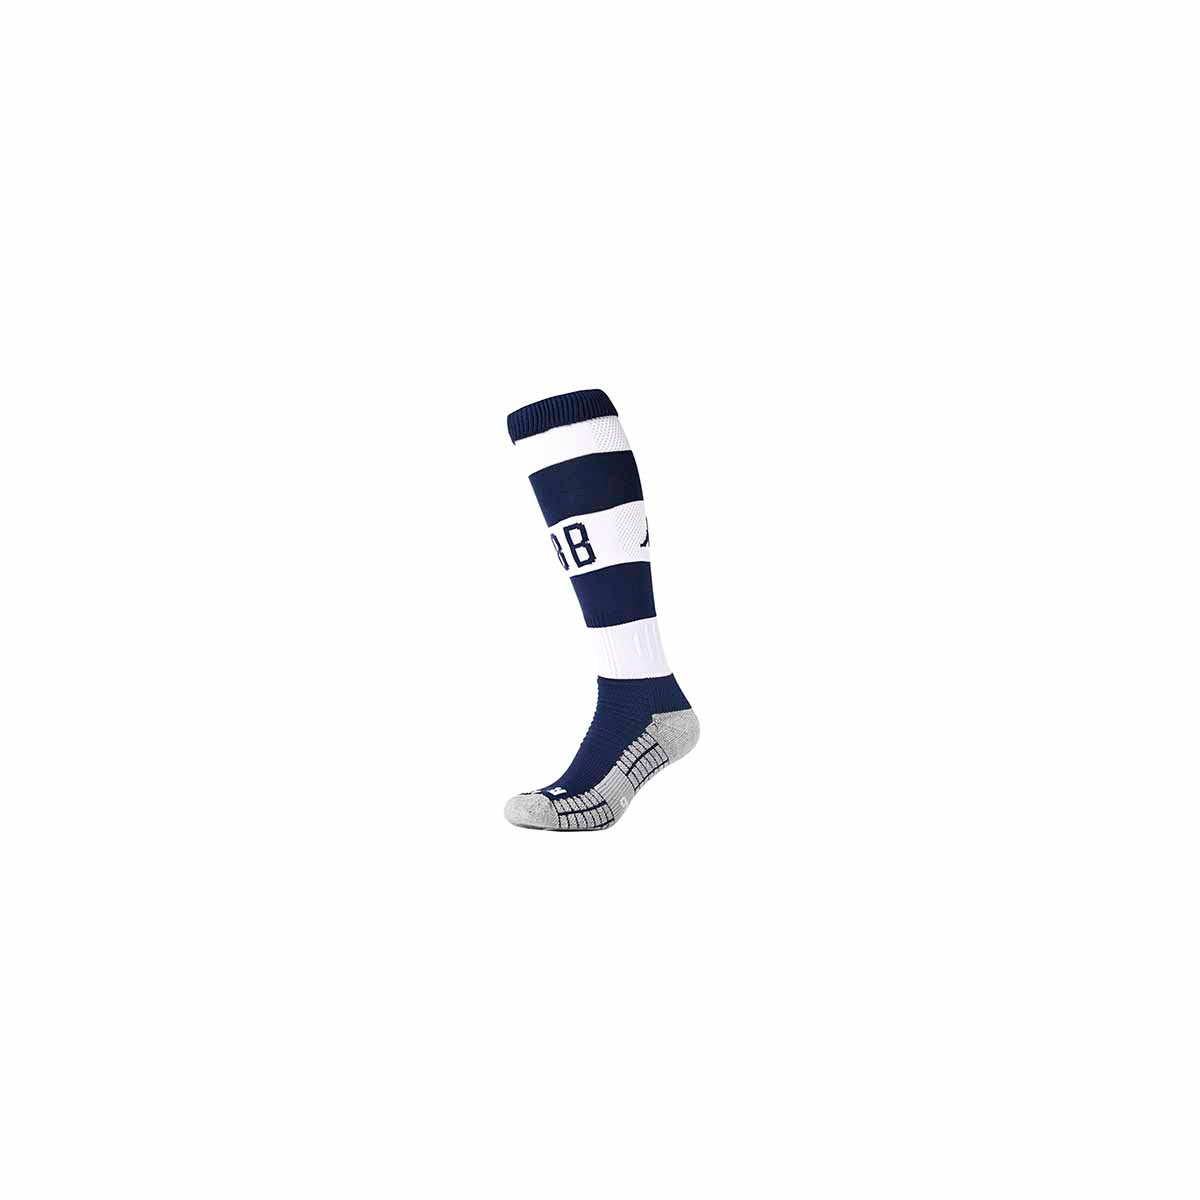 Chaussettes Kombat Pro UBB Rugby bleu homme